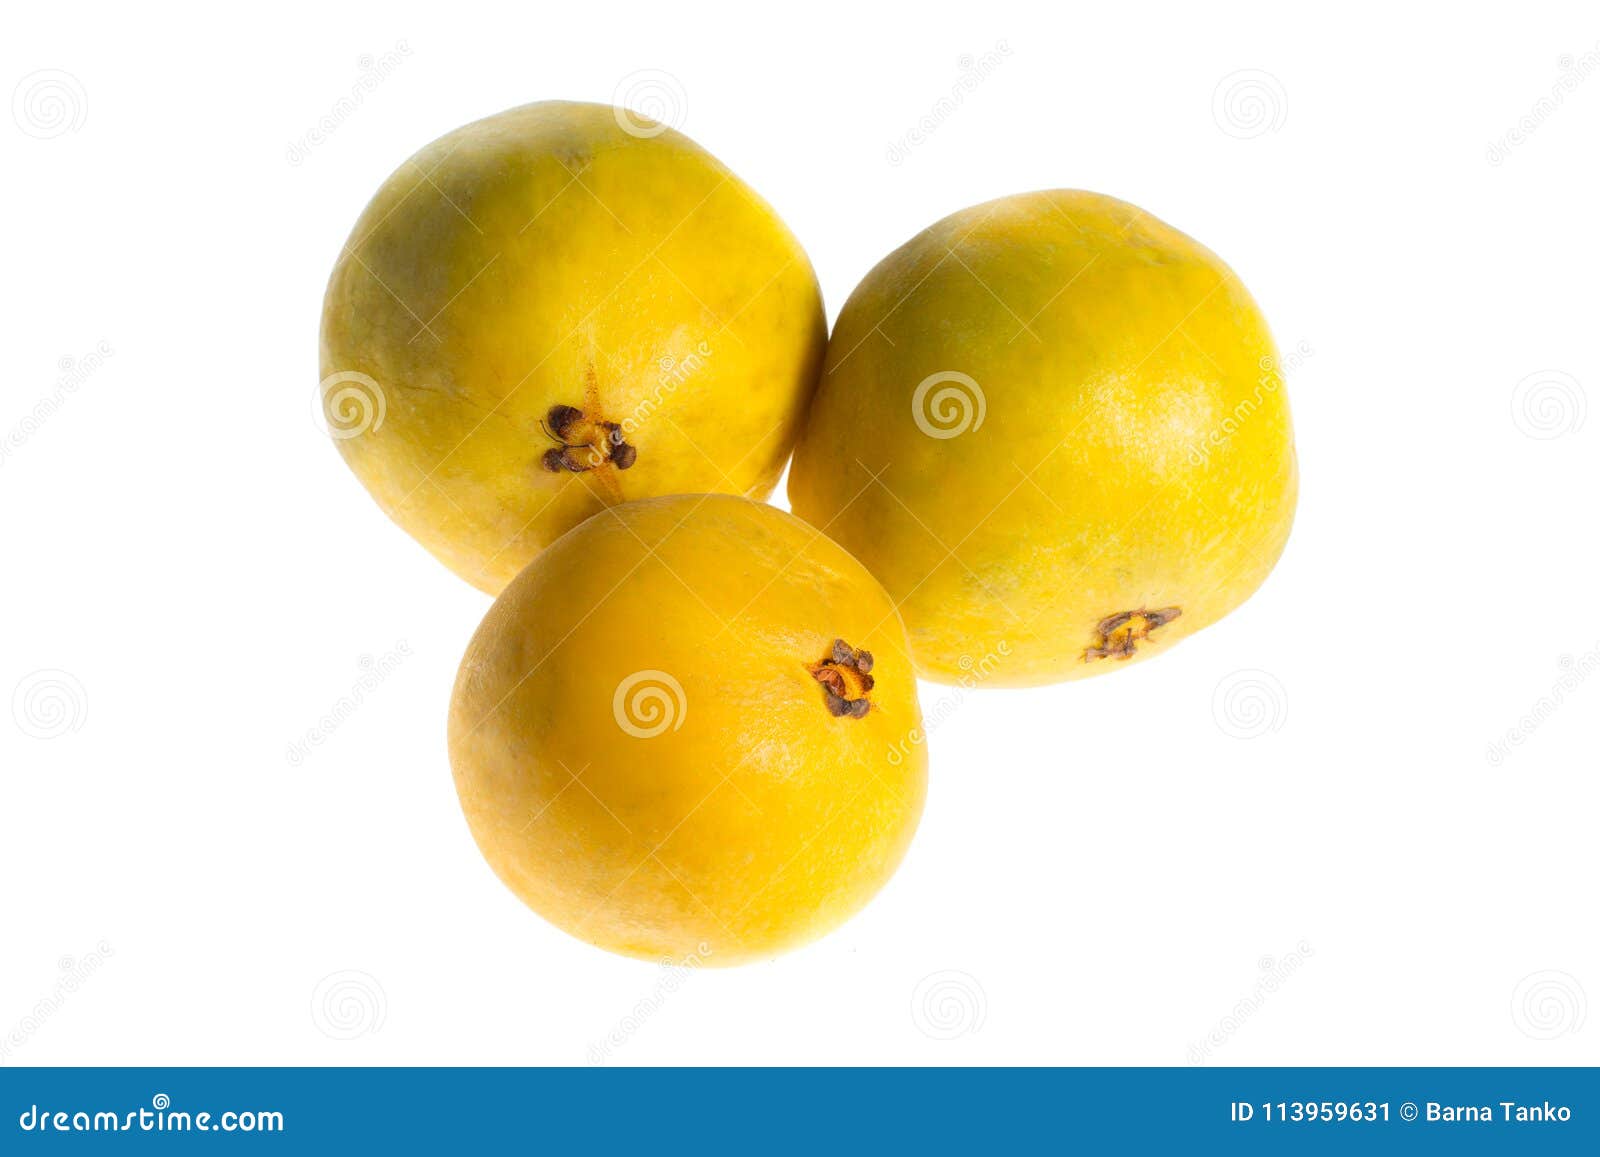 closeup of araza fruit from the amazon area